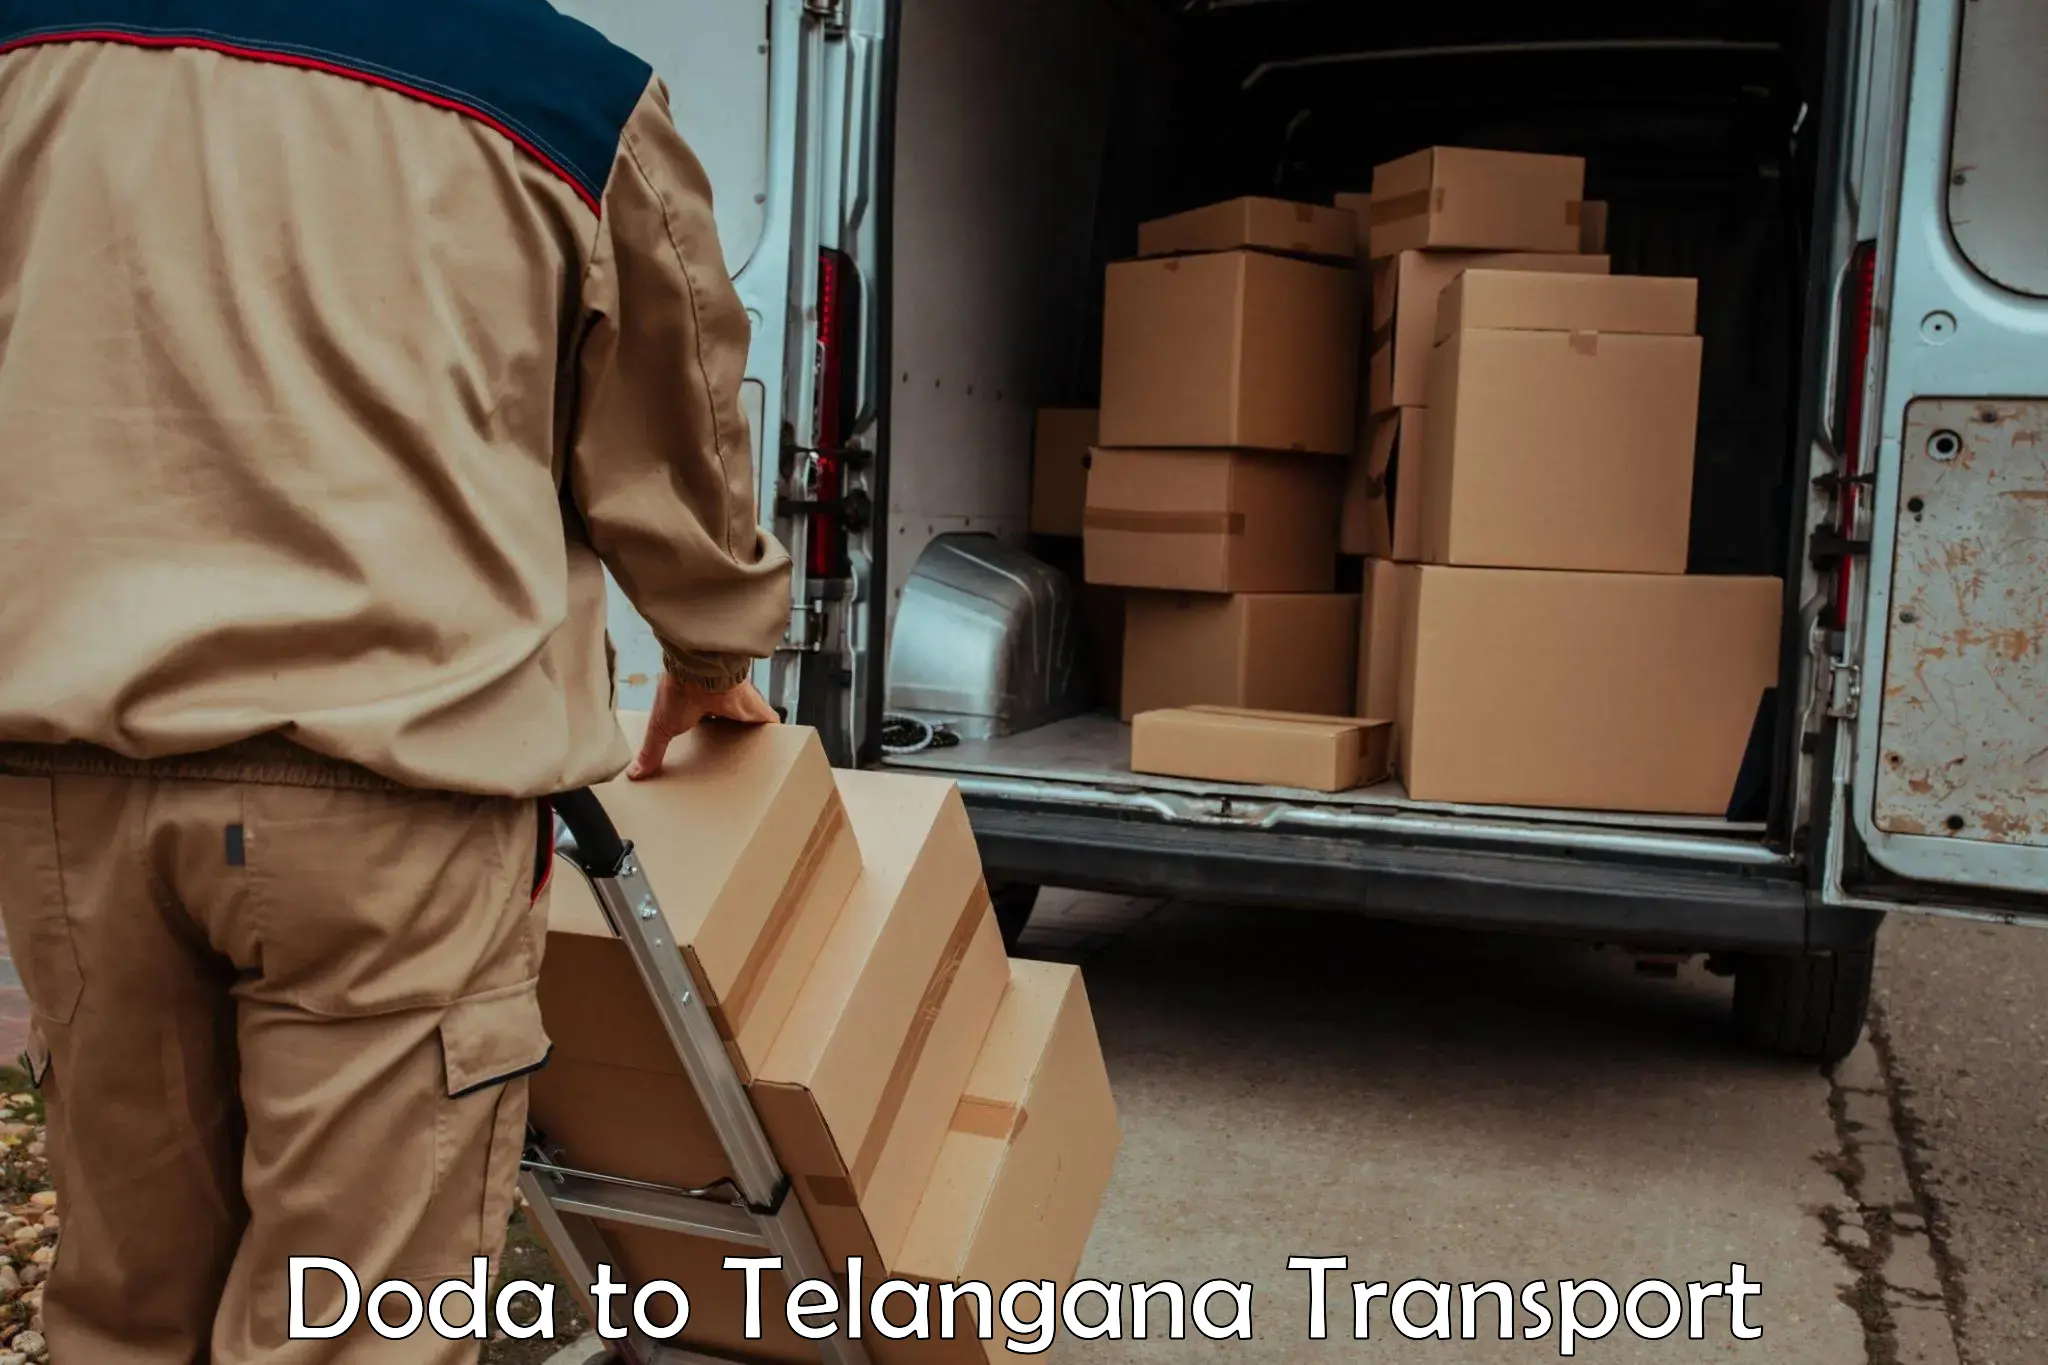 Online transport service Doda to Hyderabad